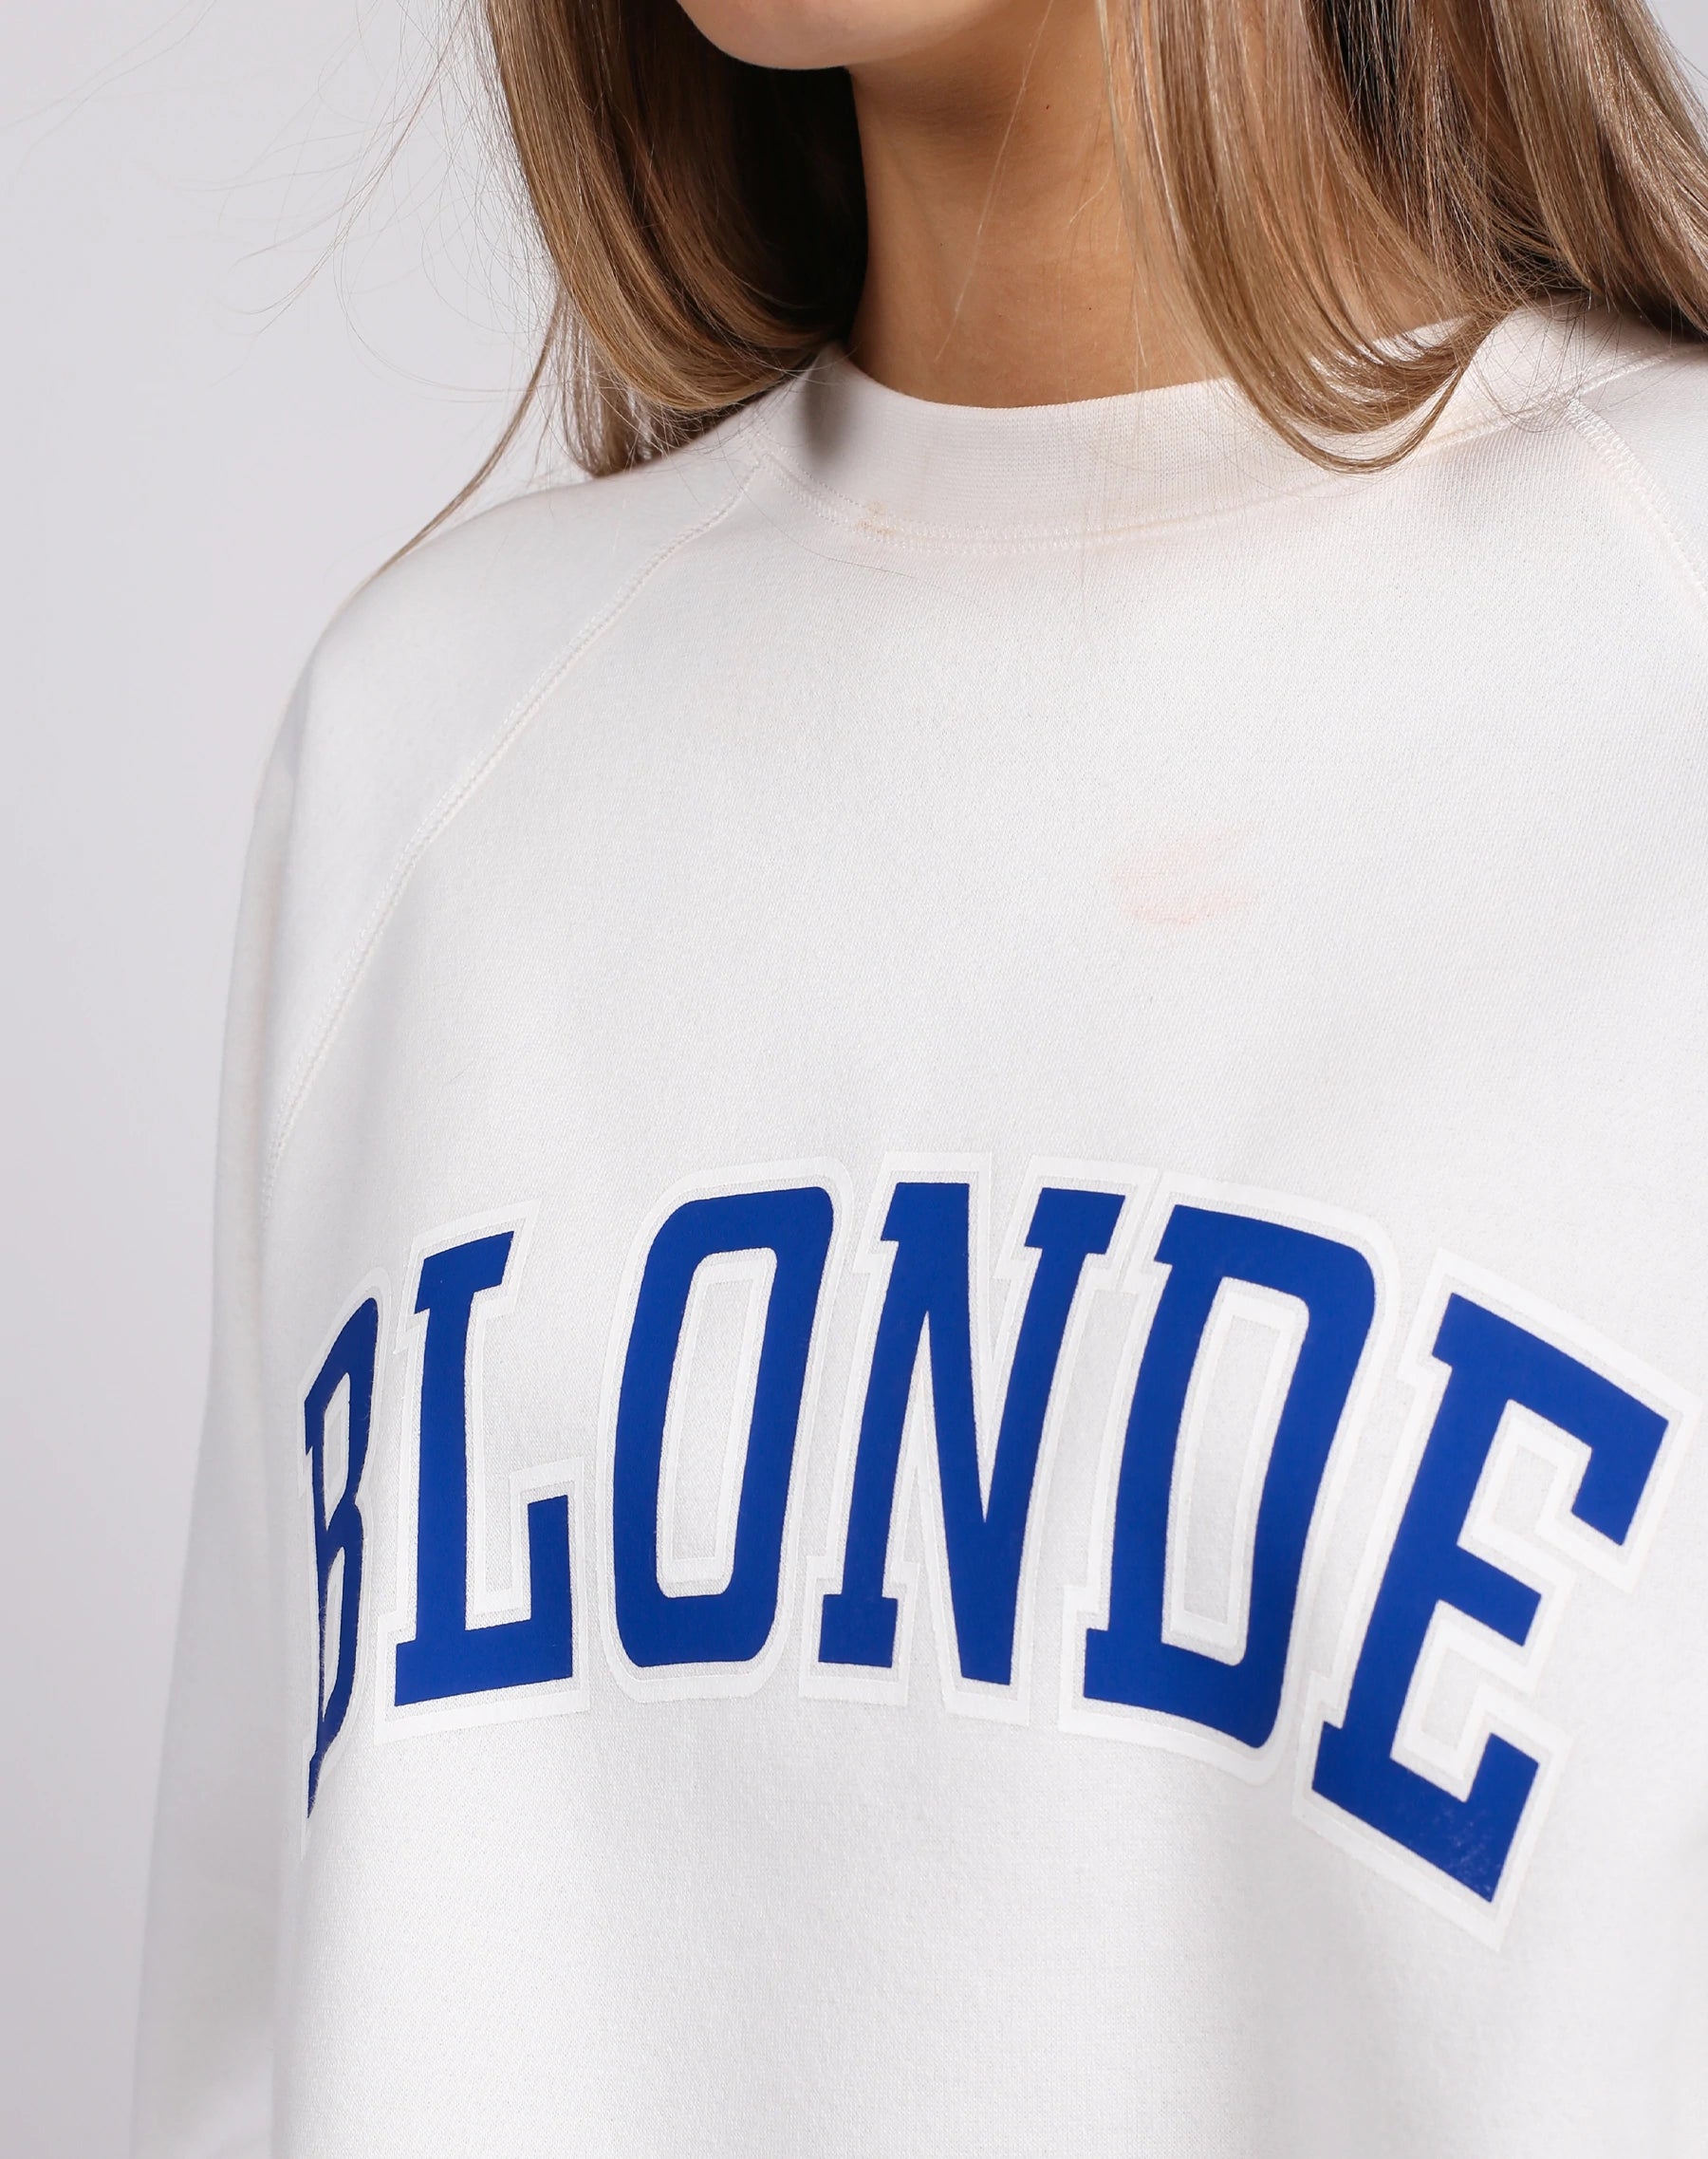 The "BLONDE" Not Your Boyfriend's Crew Neck Sweatshirt | Marshmallow